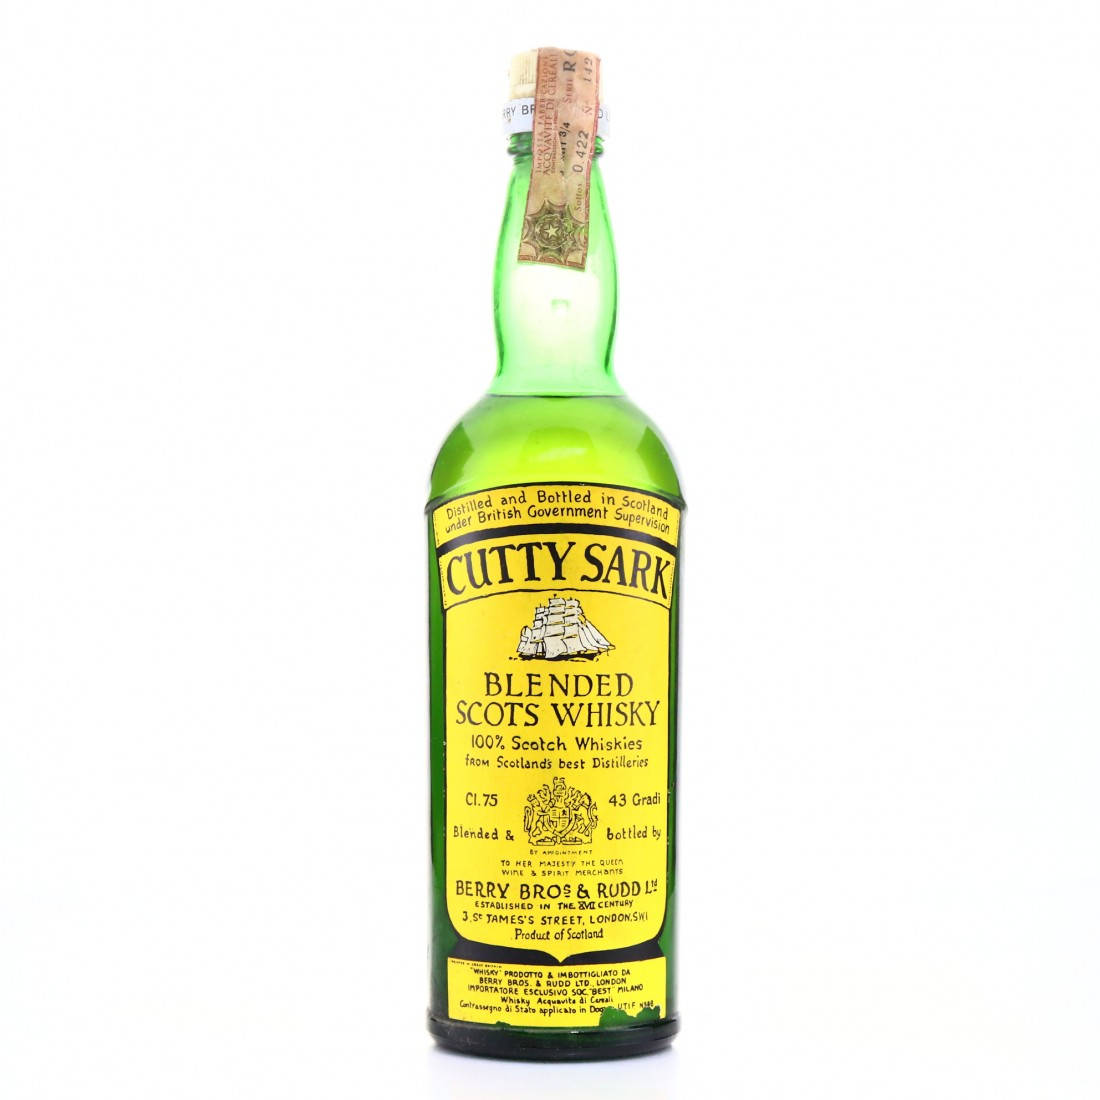 Legendary Cutty Sark Scotch Whisky Bottle Wallpaper